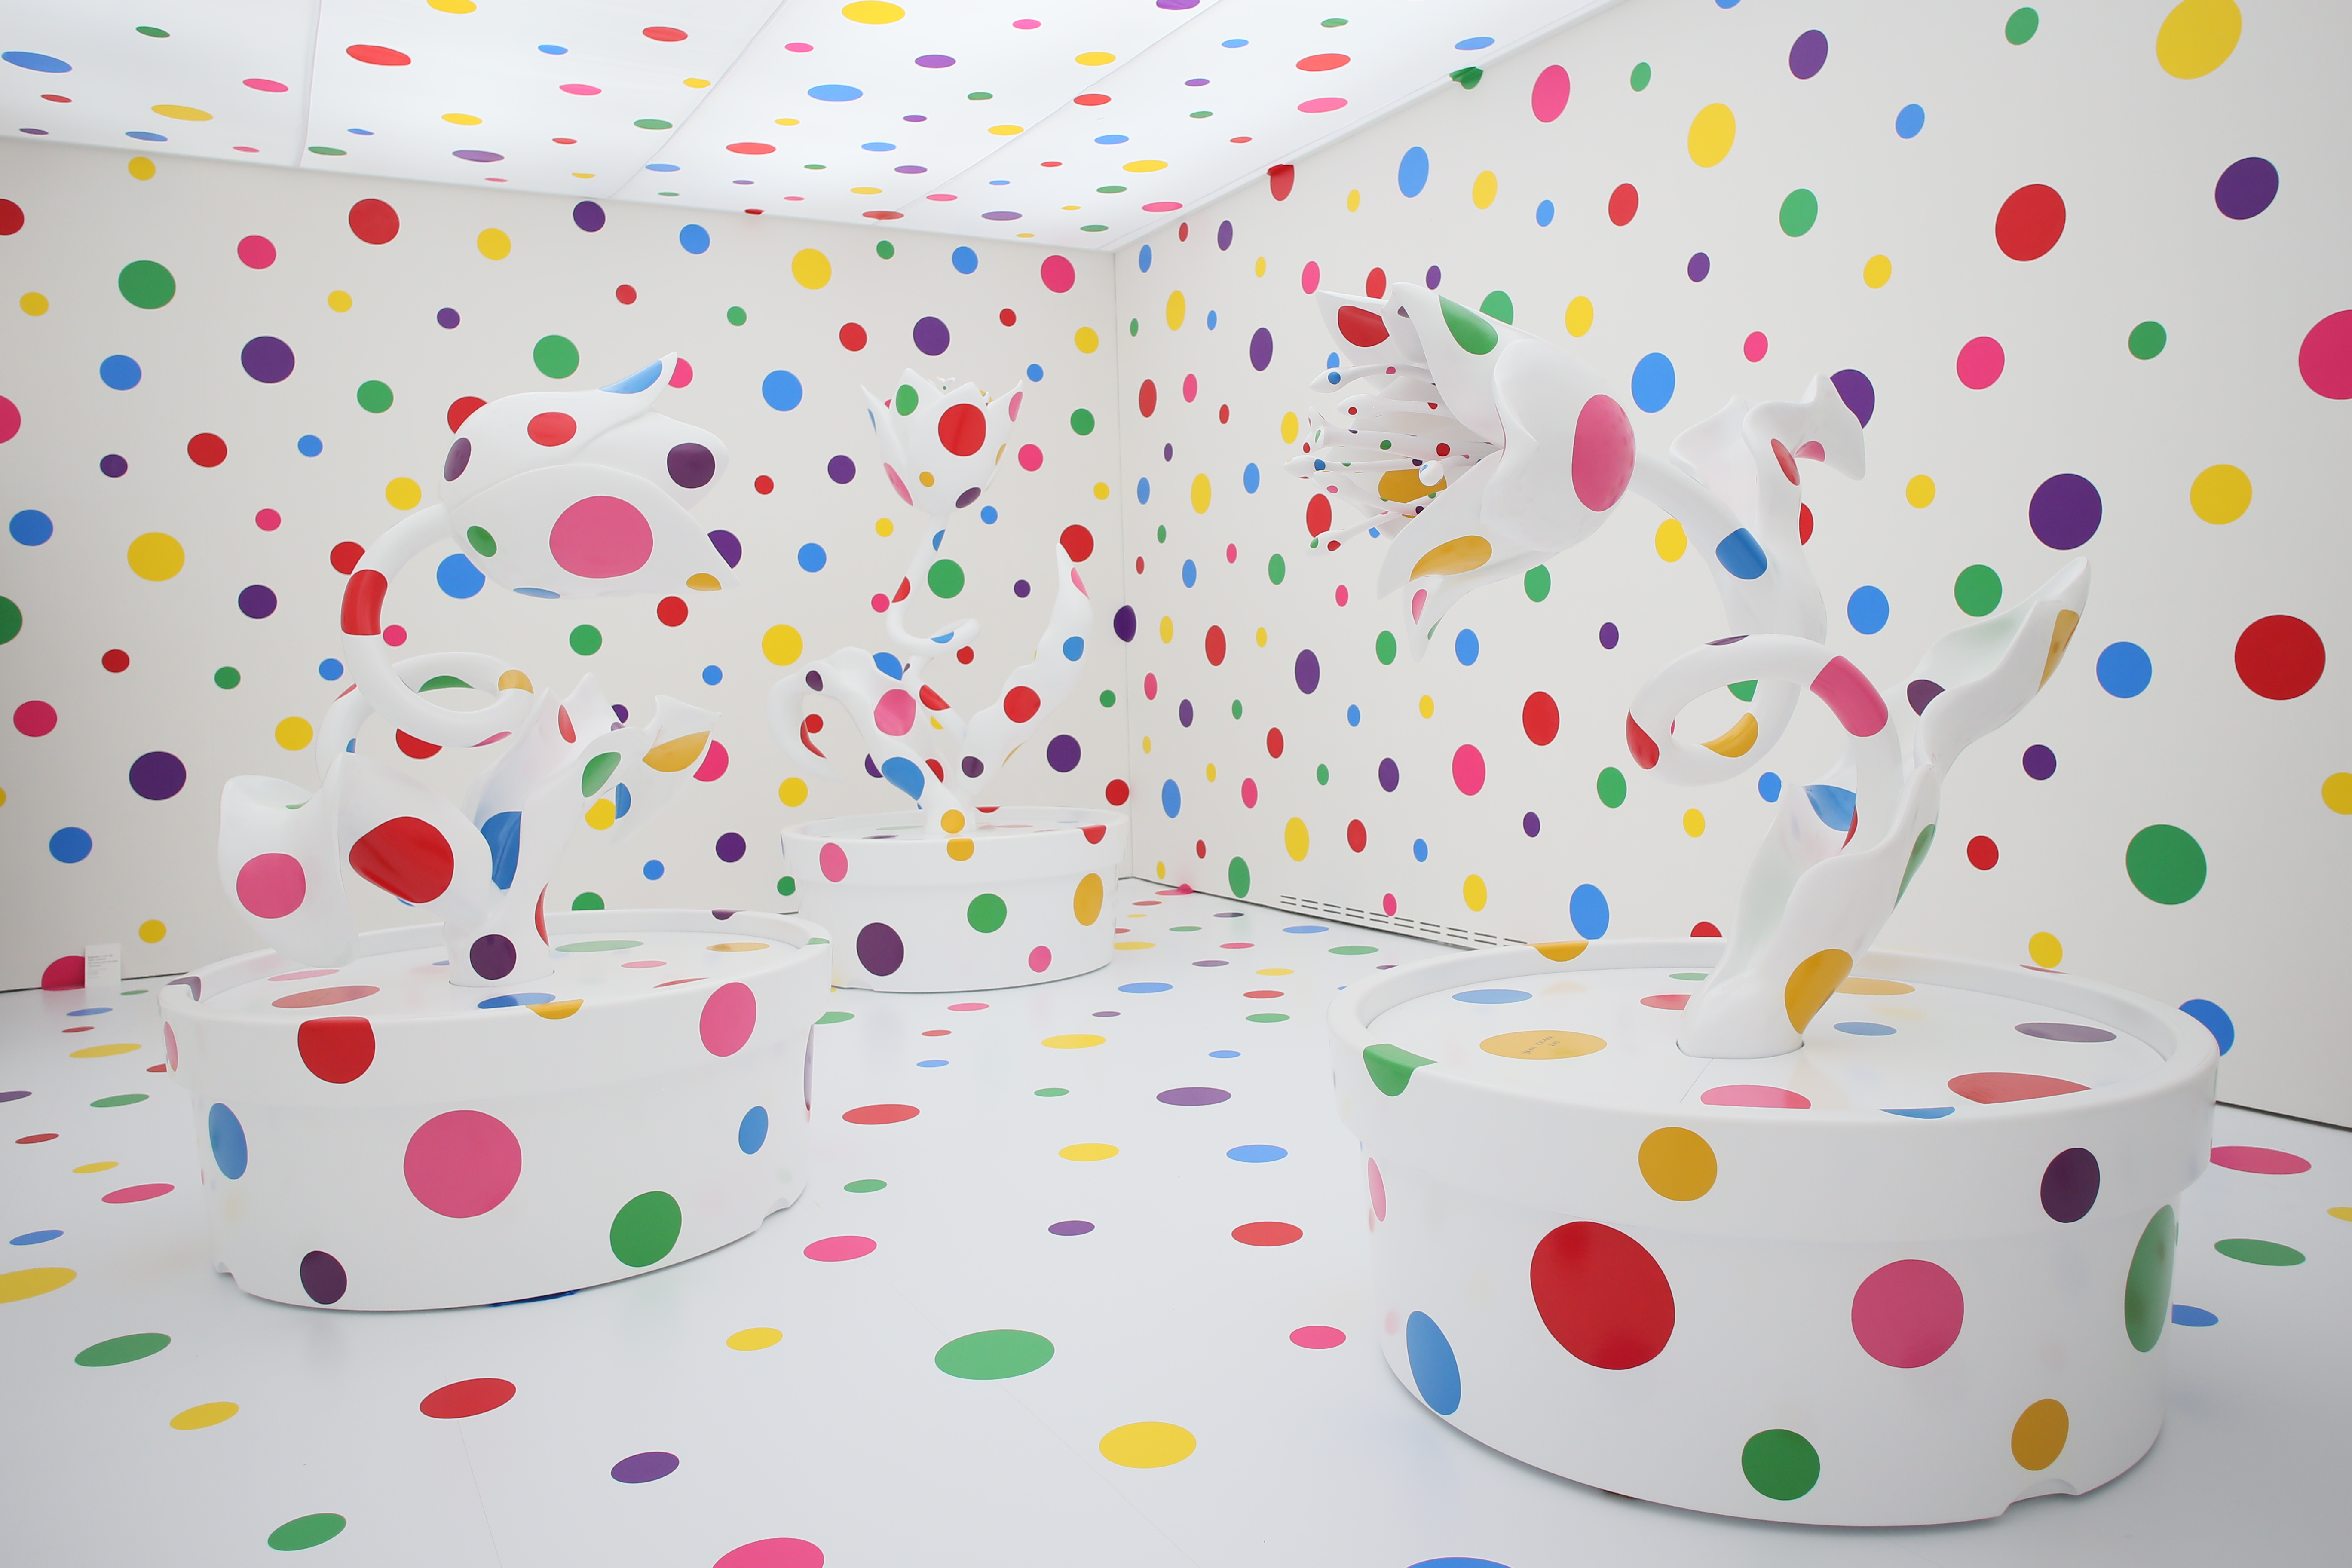 Polka dots are artist's lifelong love